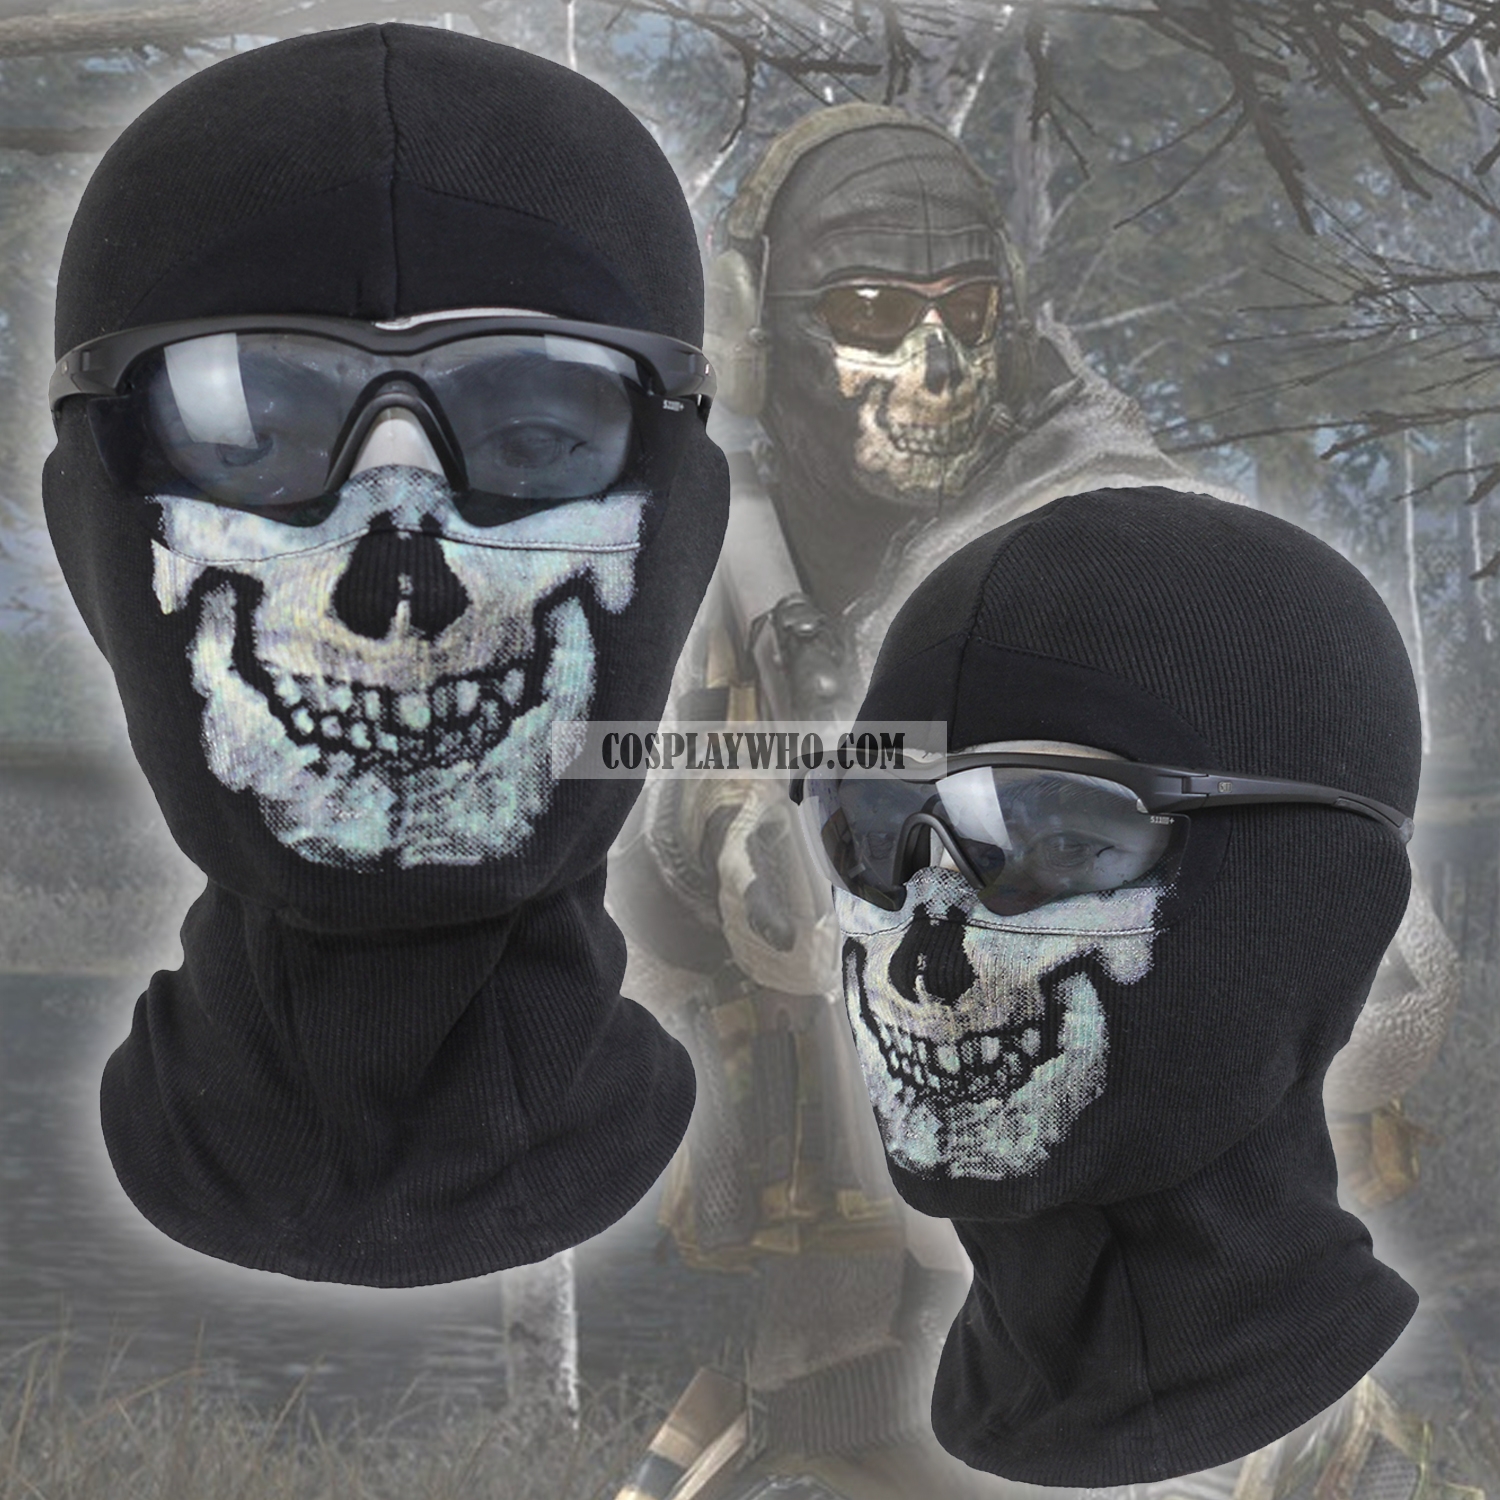 The Promised Neverland Demon Mask Anime Demon Mask Ghost Mask 